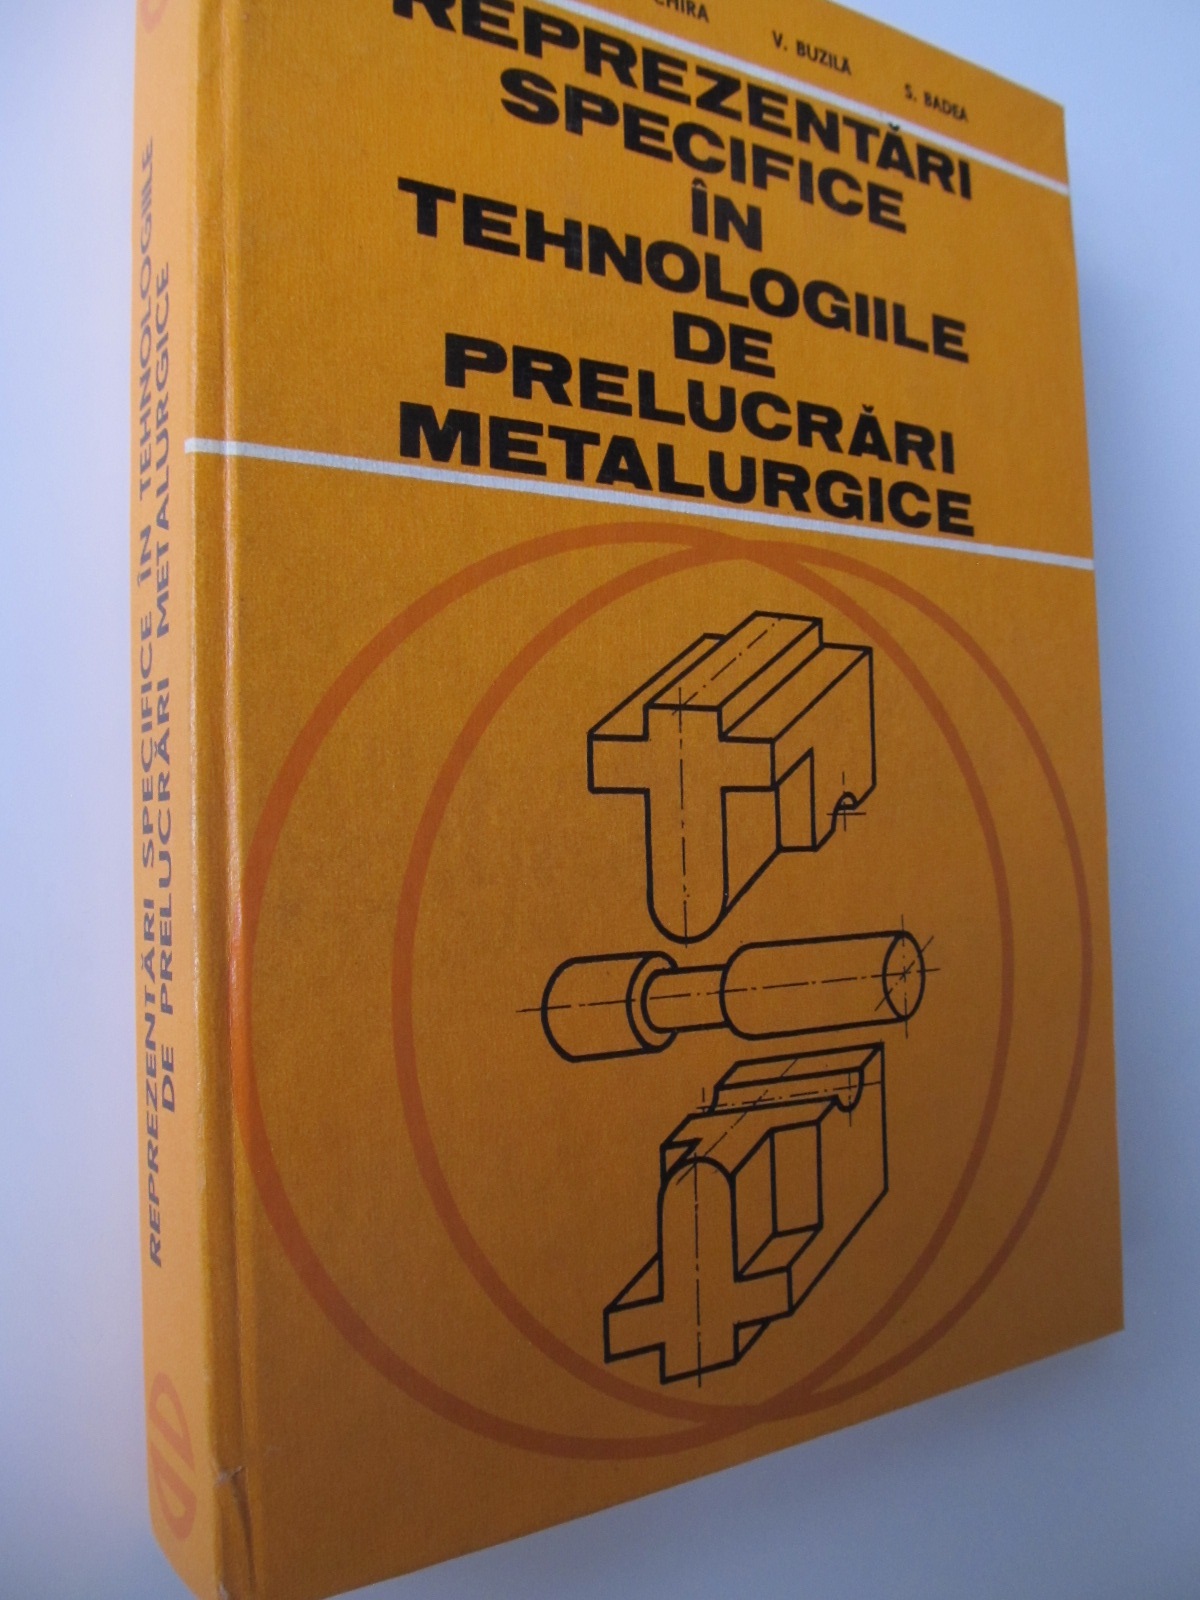 Reprezentari specifice in tehnologiile de prelucrari metalurgice - T. Ivanceanu , I. Chira , V. Buzila , S. Badea | Detalii carte